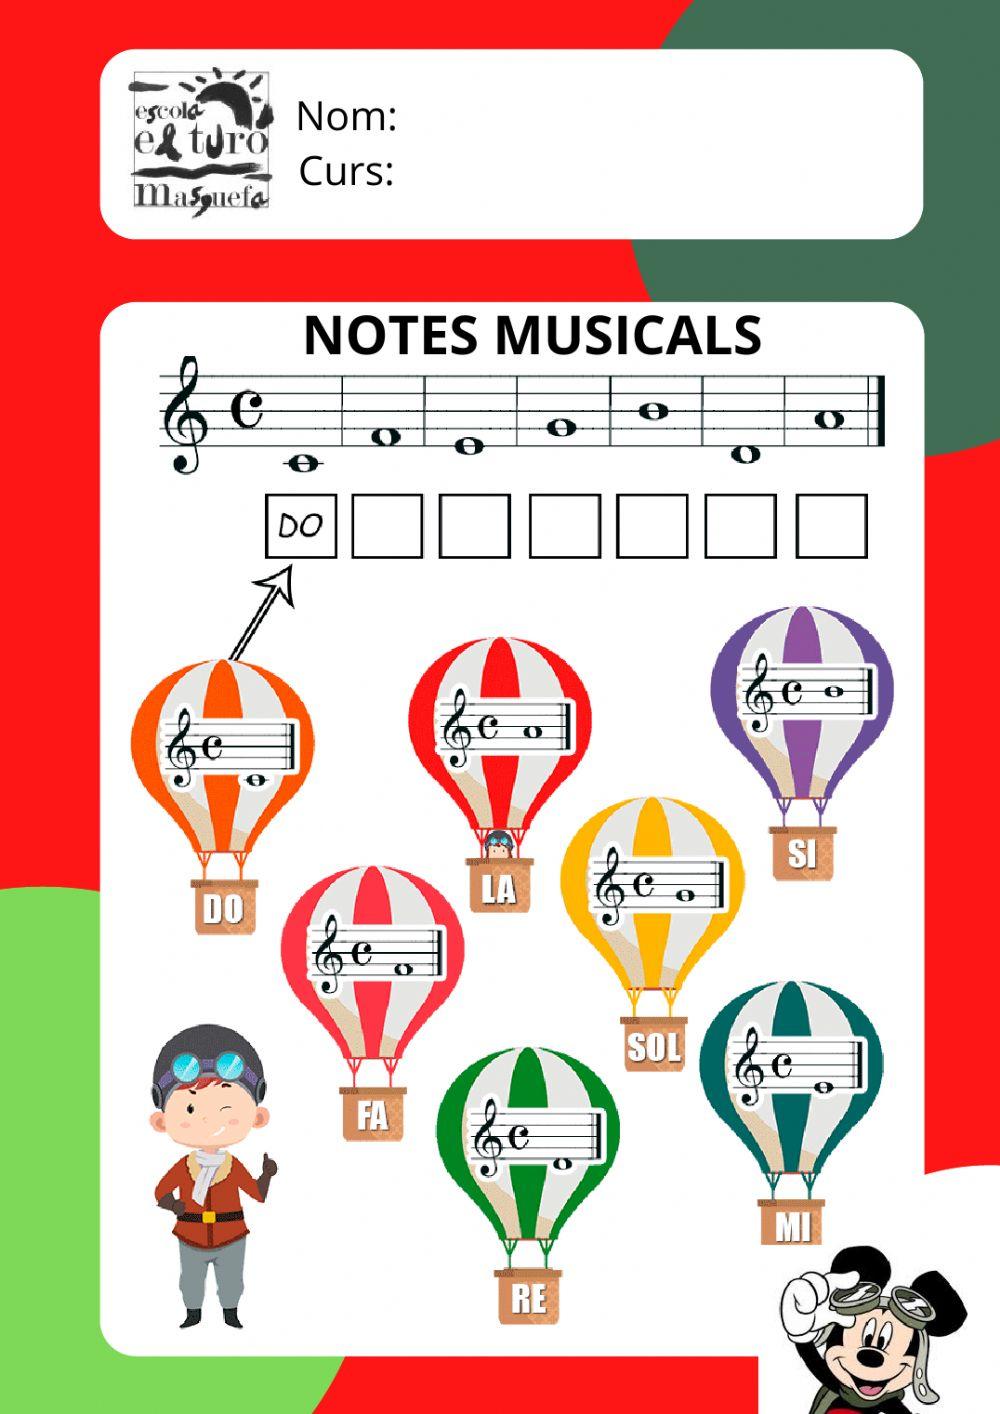 Notes musicals